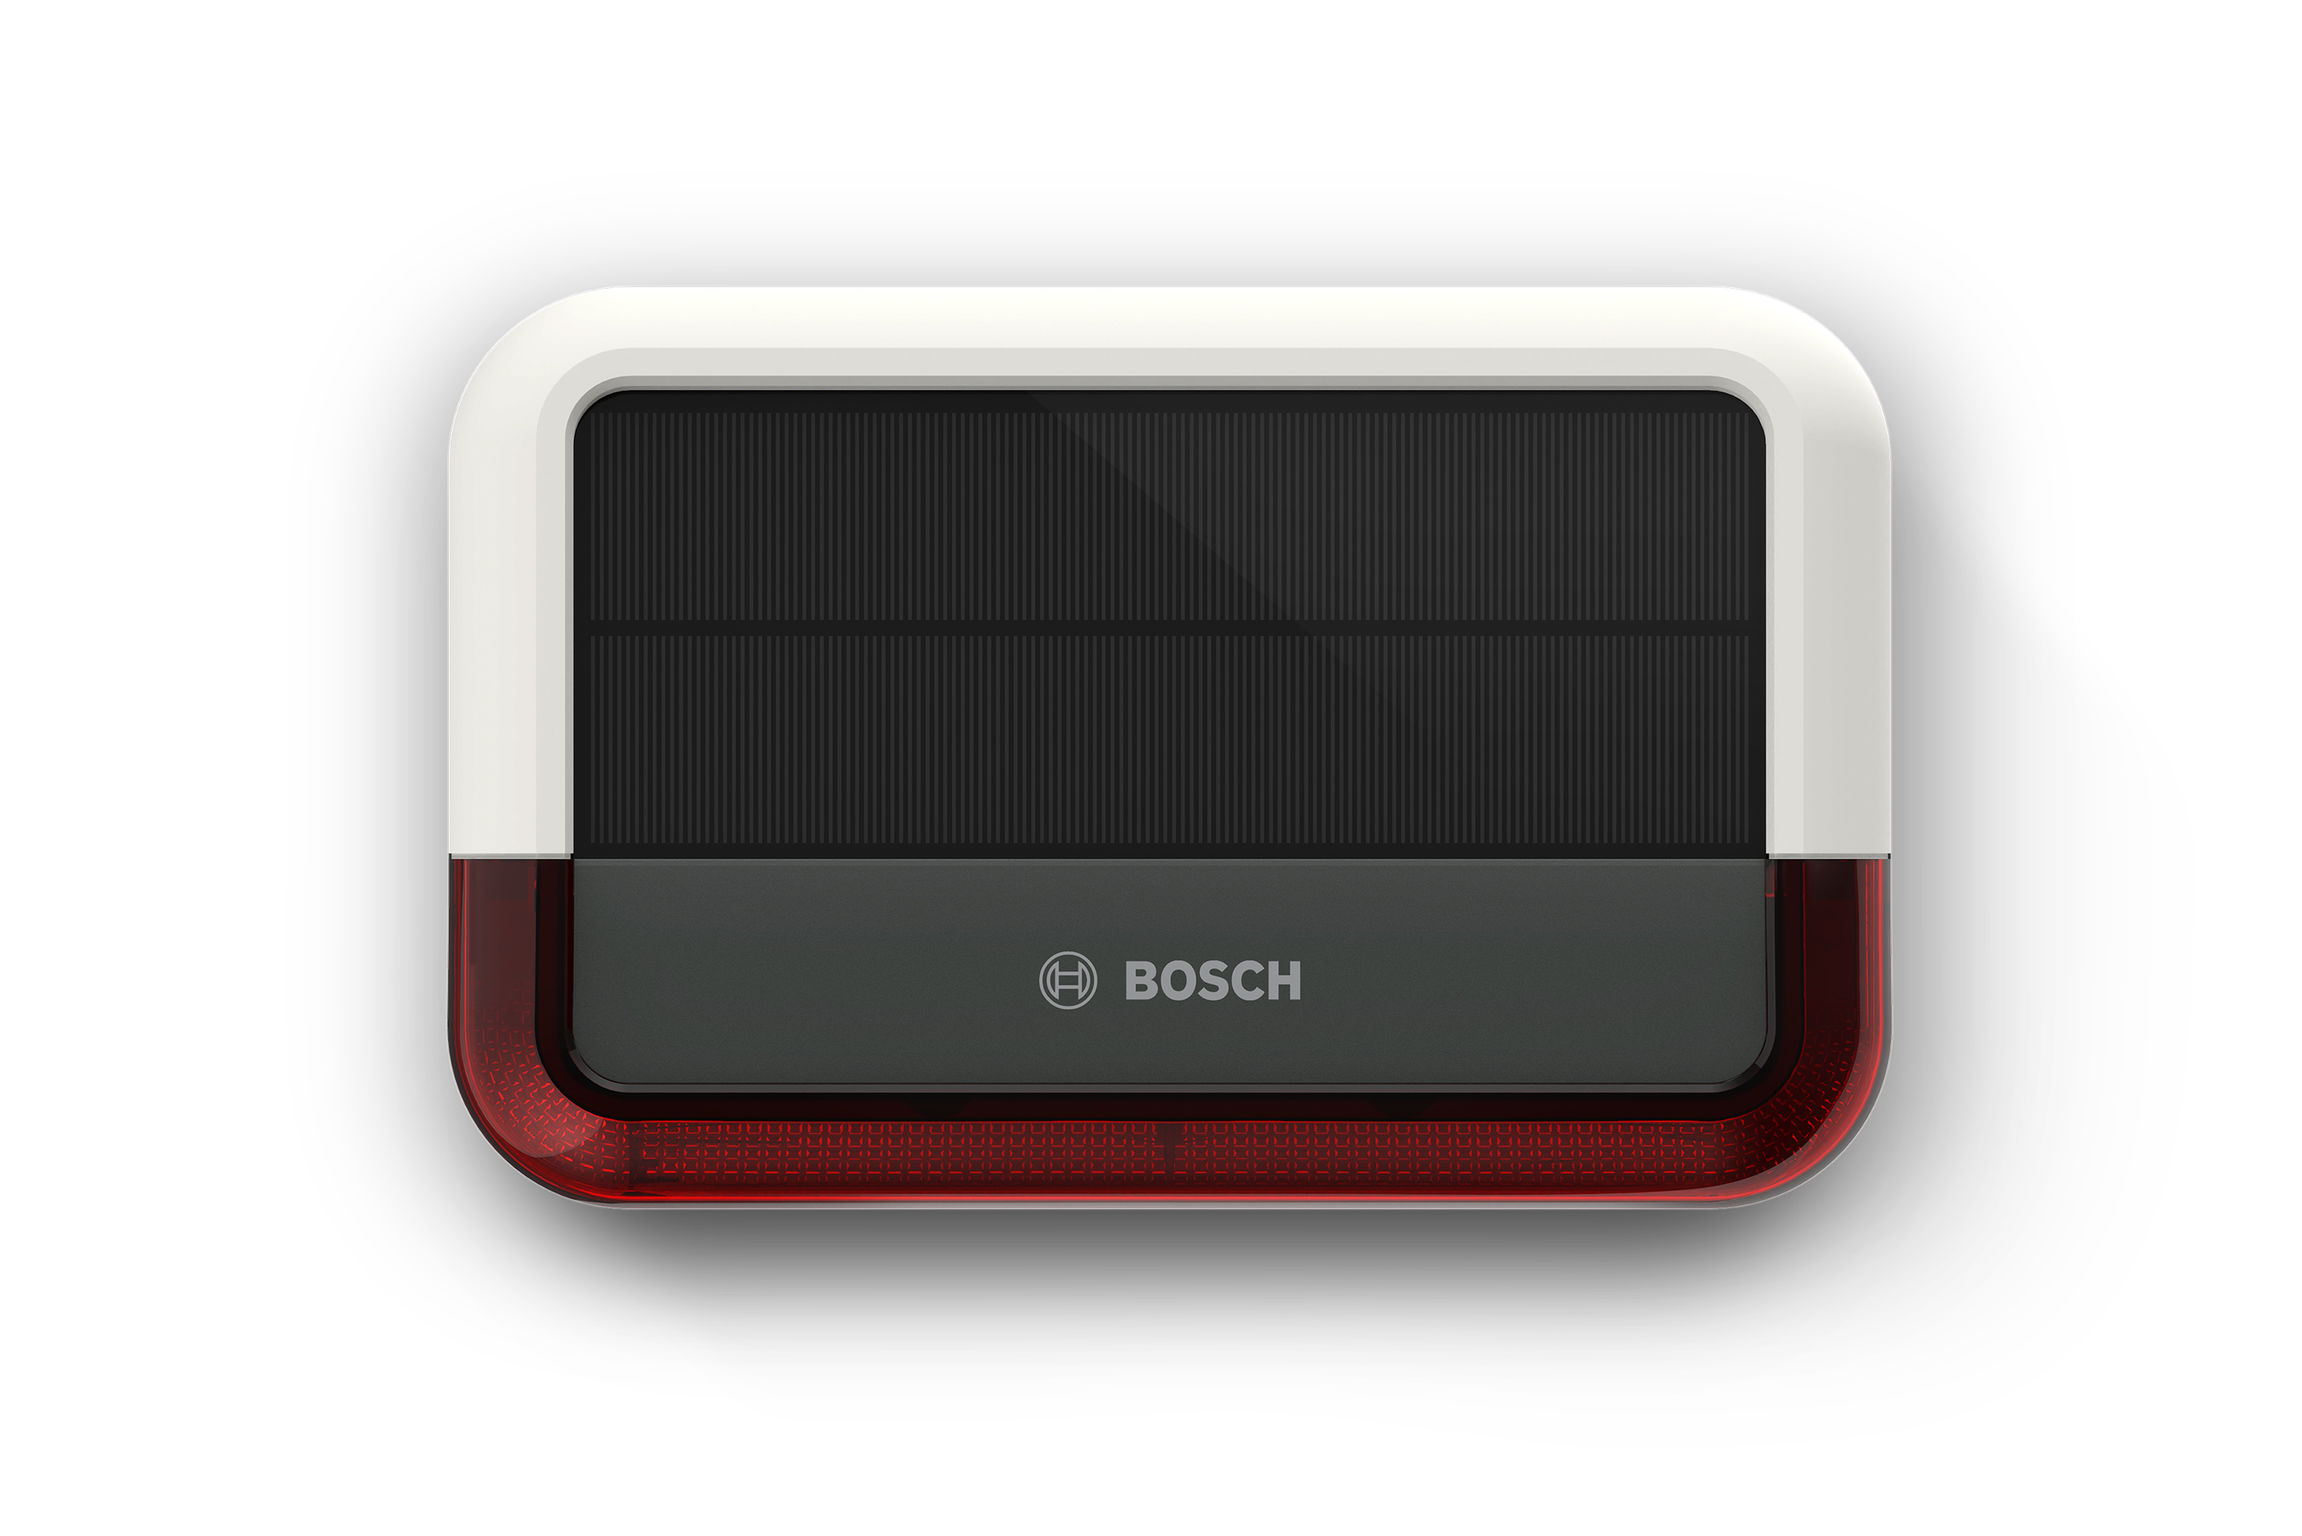 Bosch Smart Home Outdoor Siren